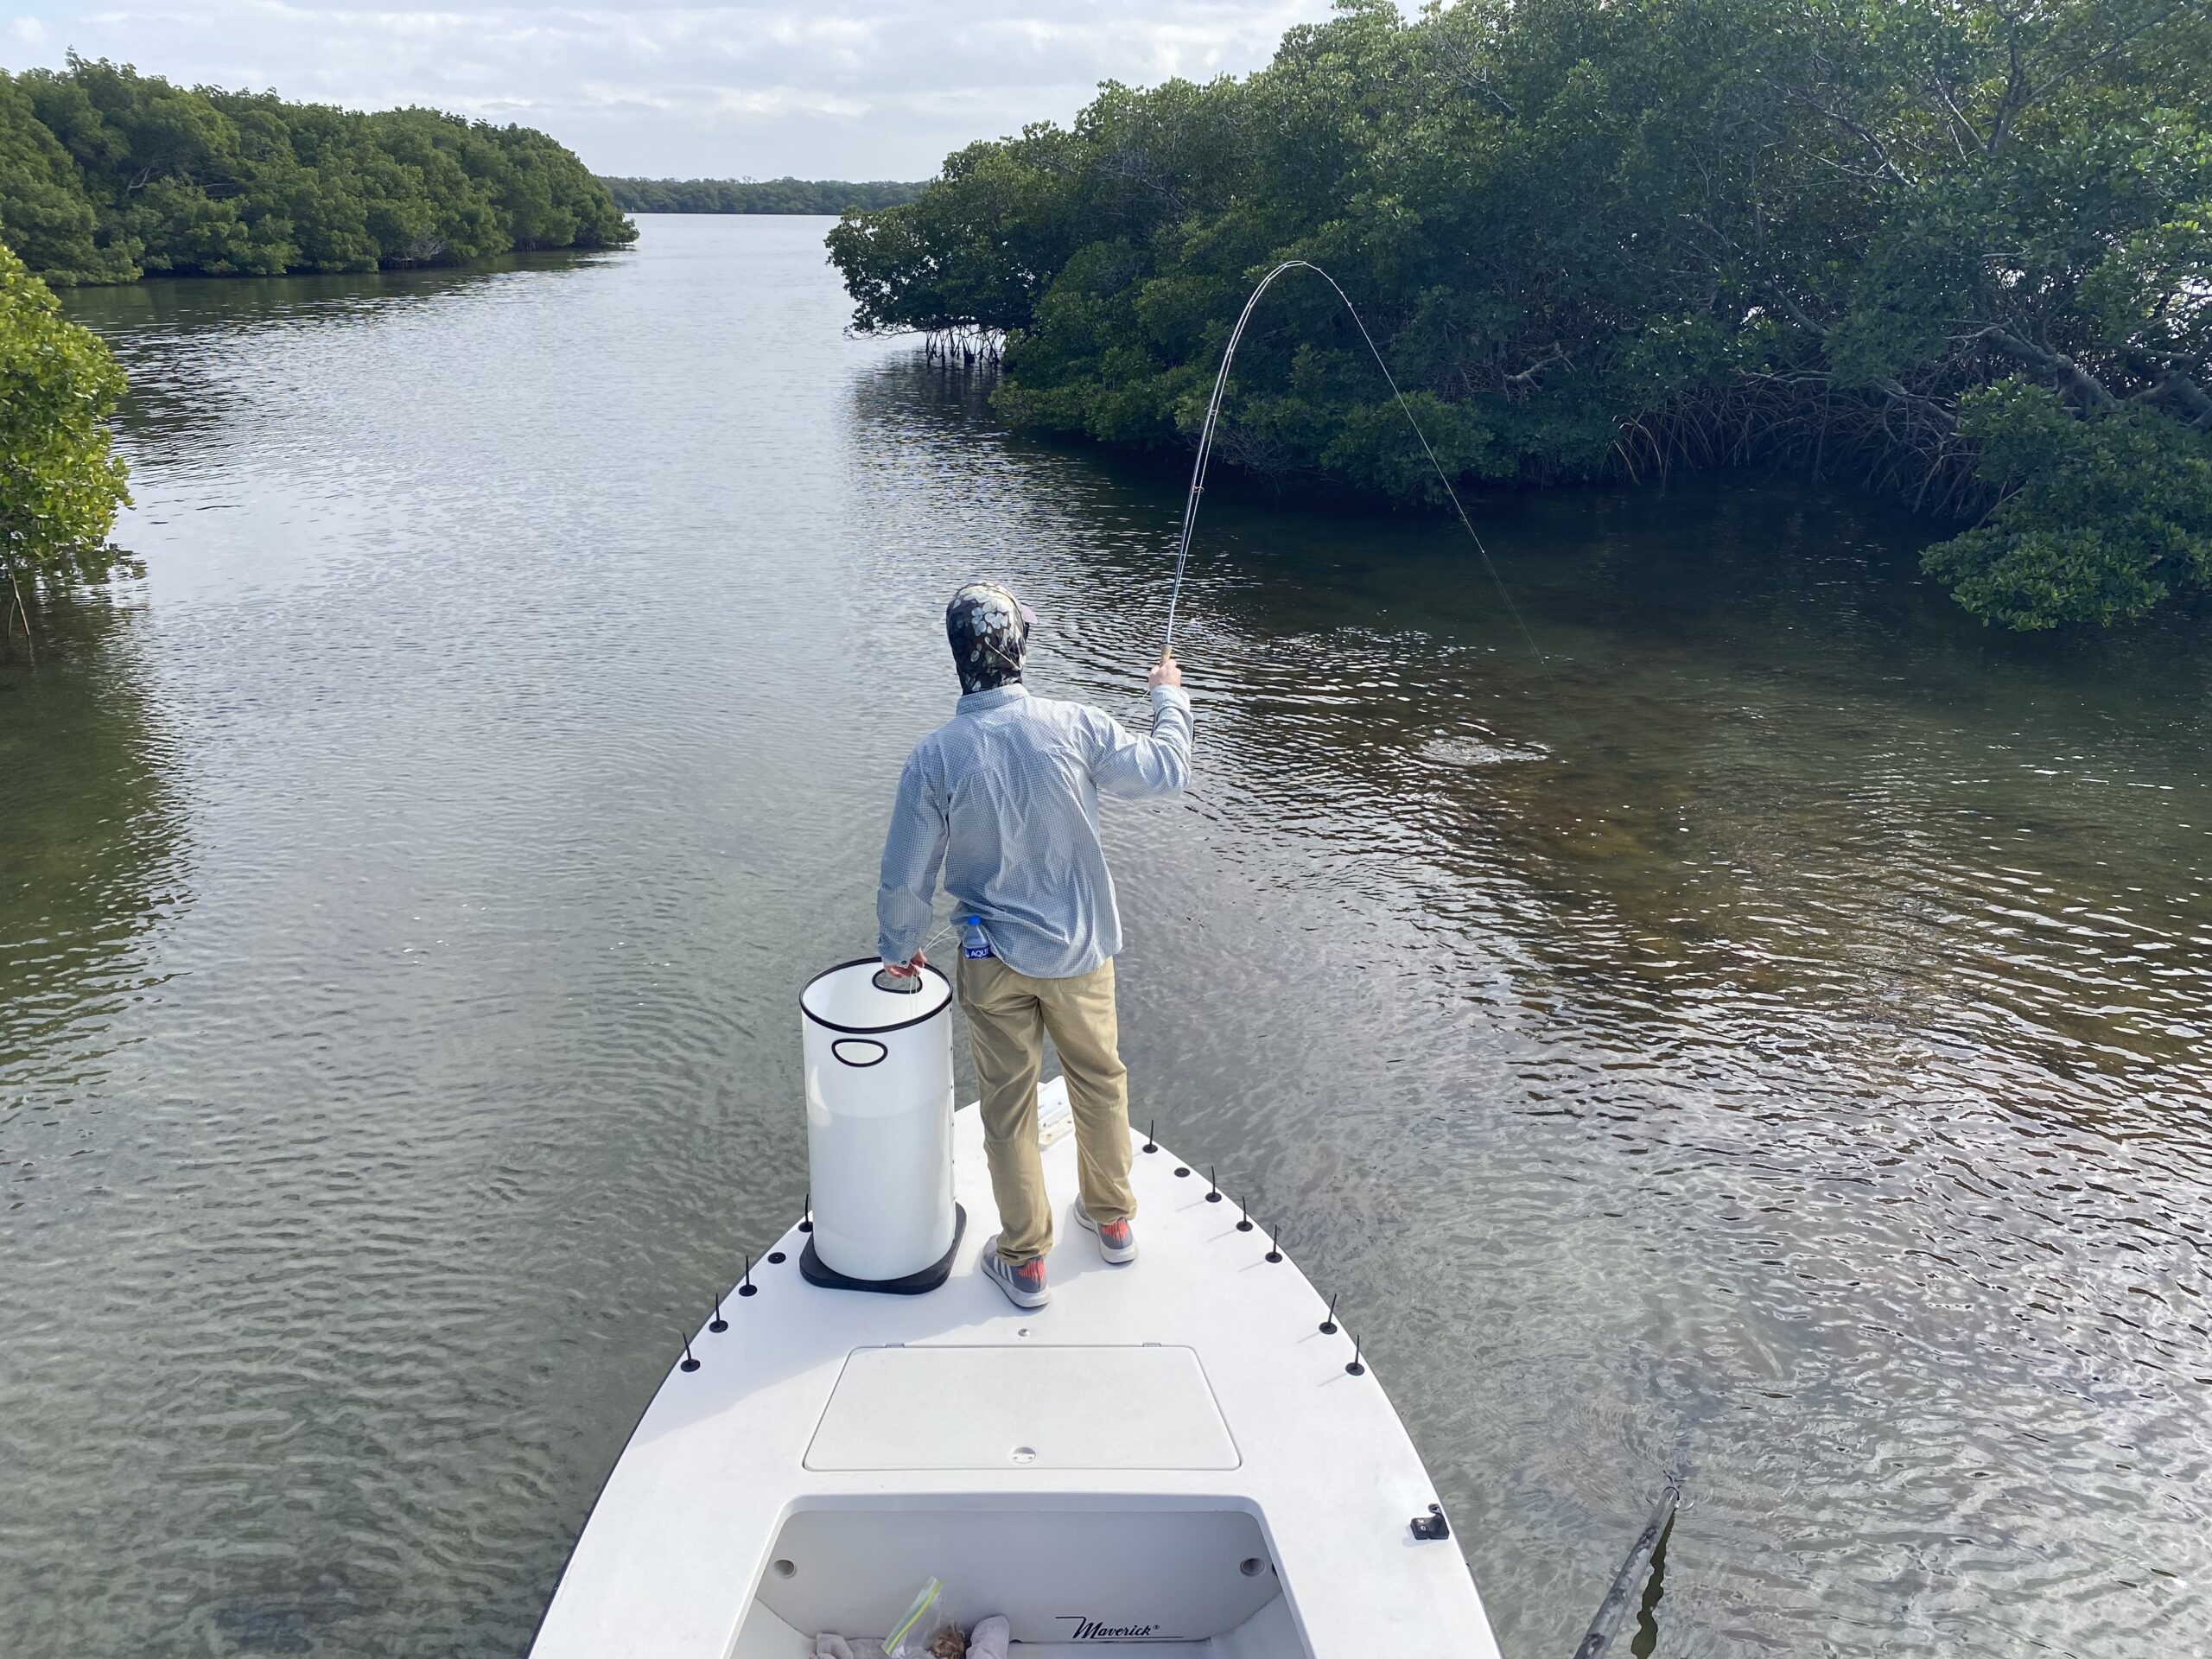 An angler fights a snook on a fly rod near mangrove islands